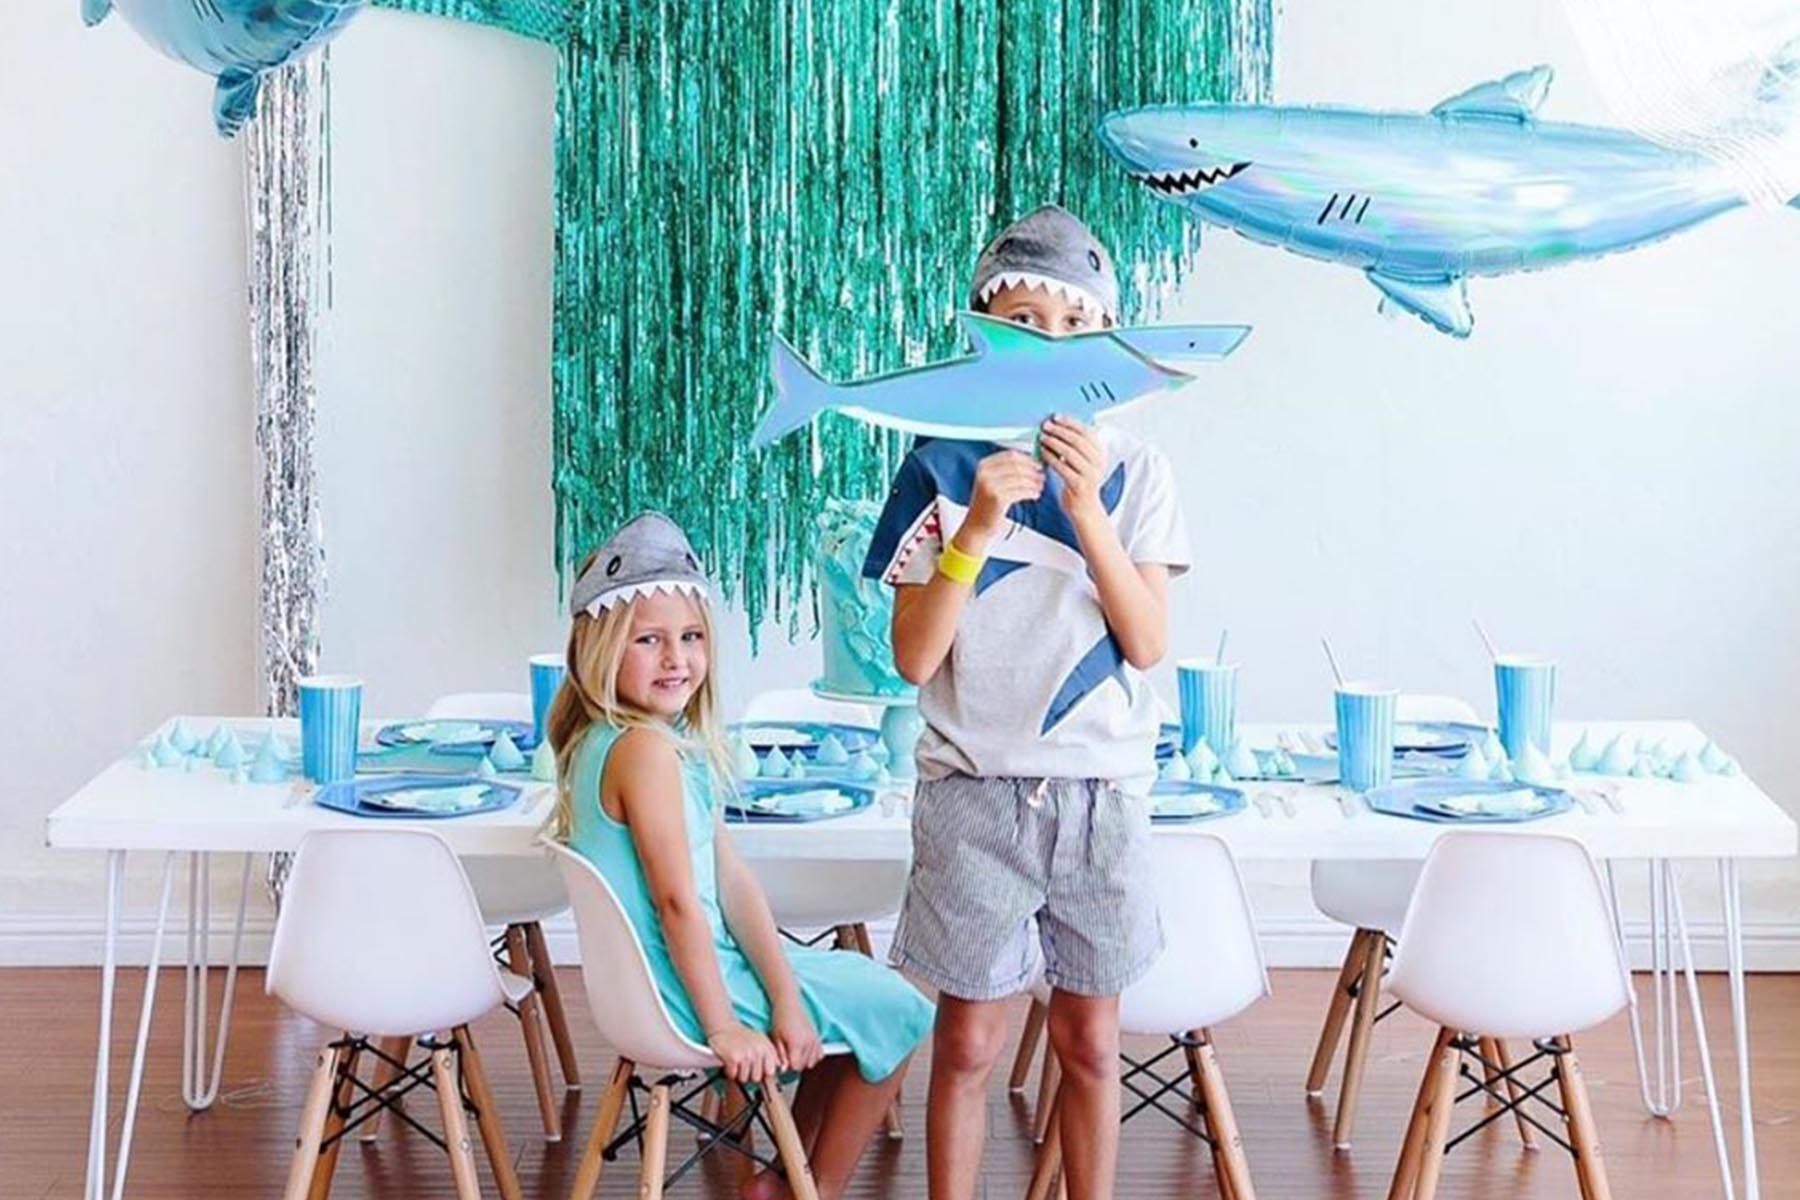 Baby Shark Theme Birthday Party Ideas